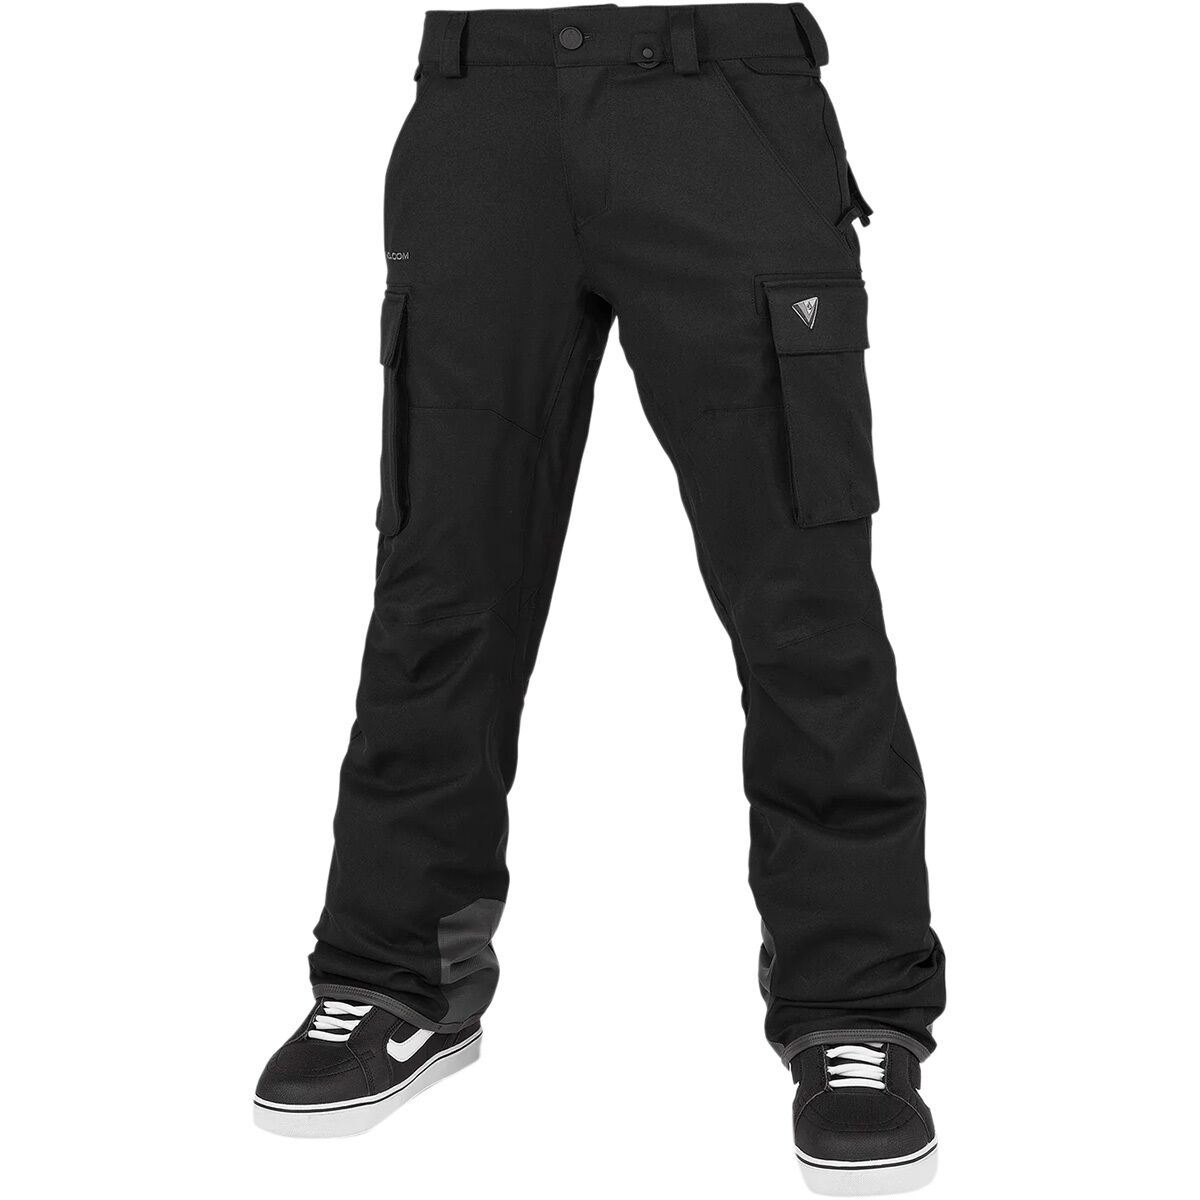 Volcom New Articulated Pant - Men's Black